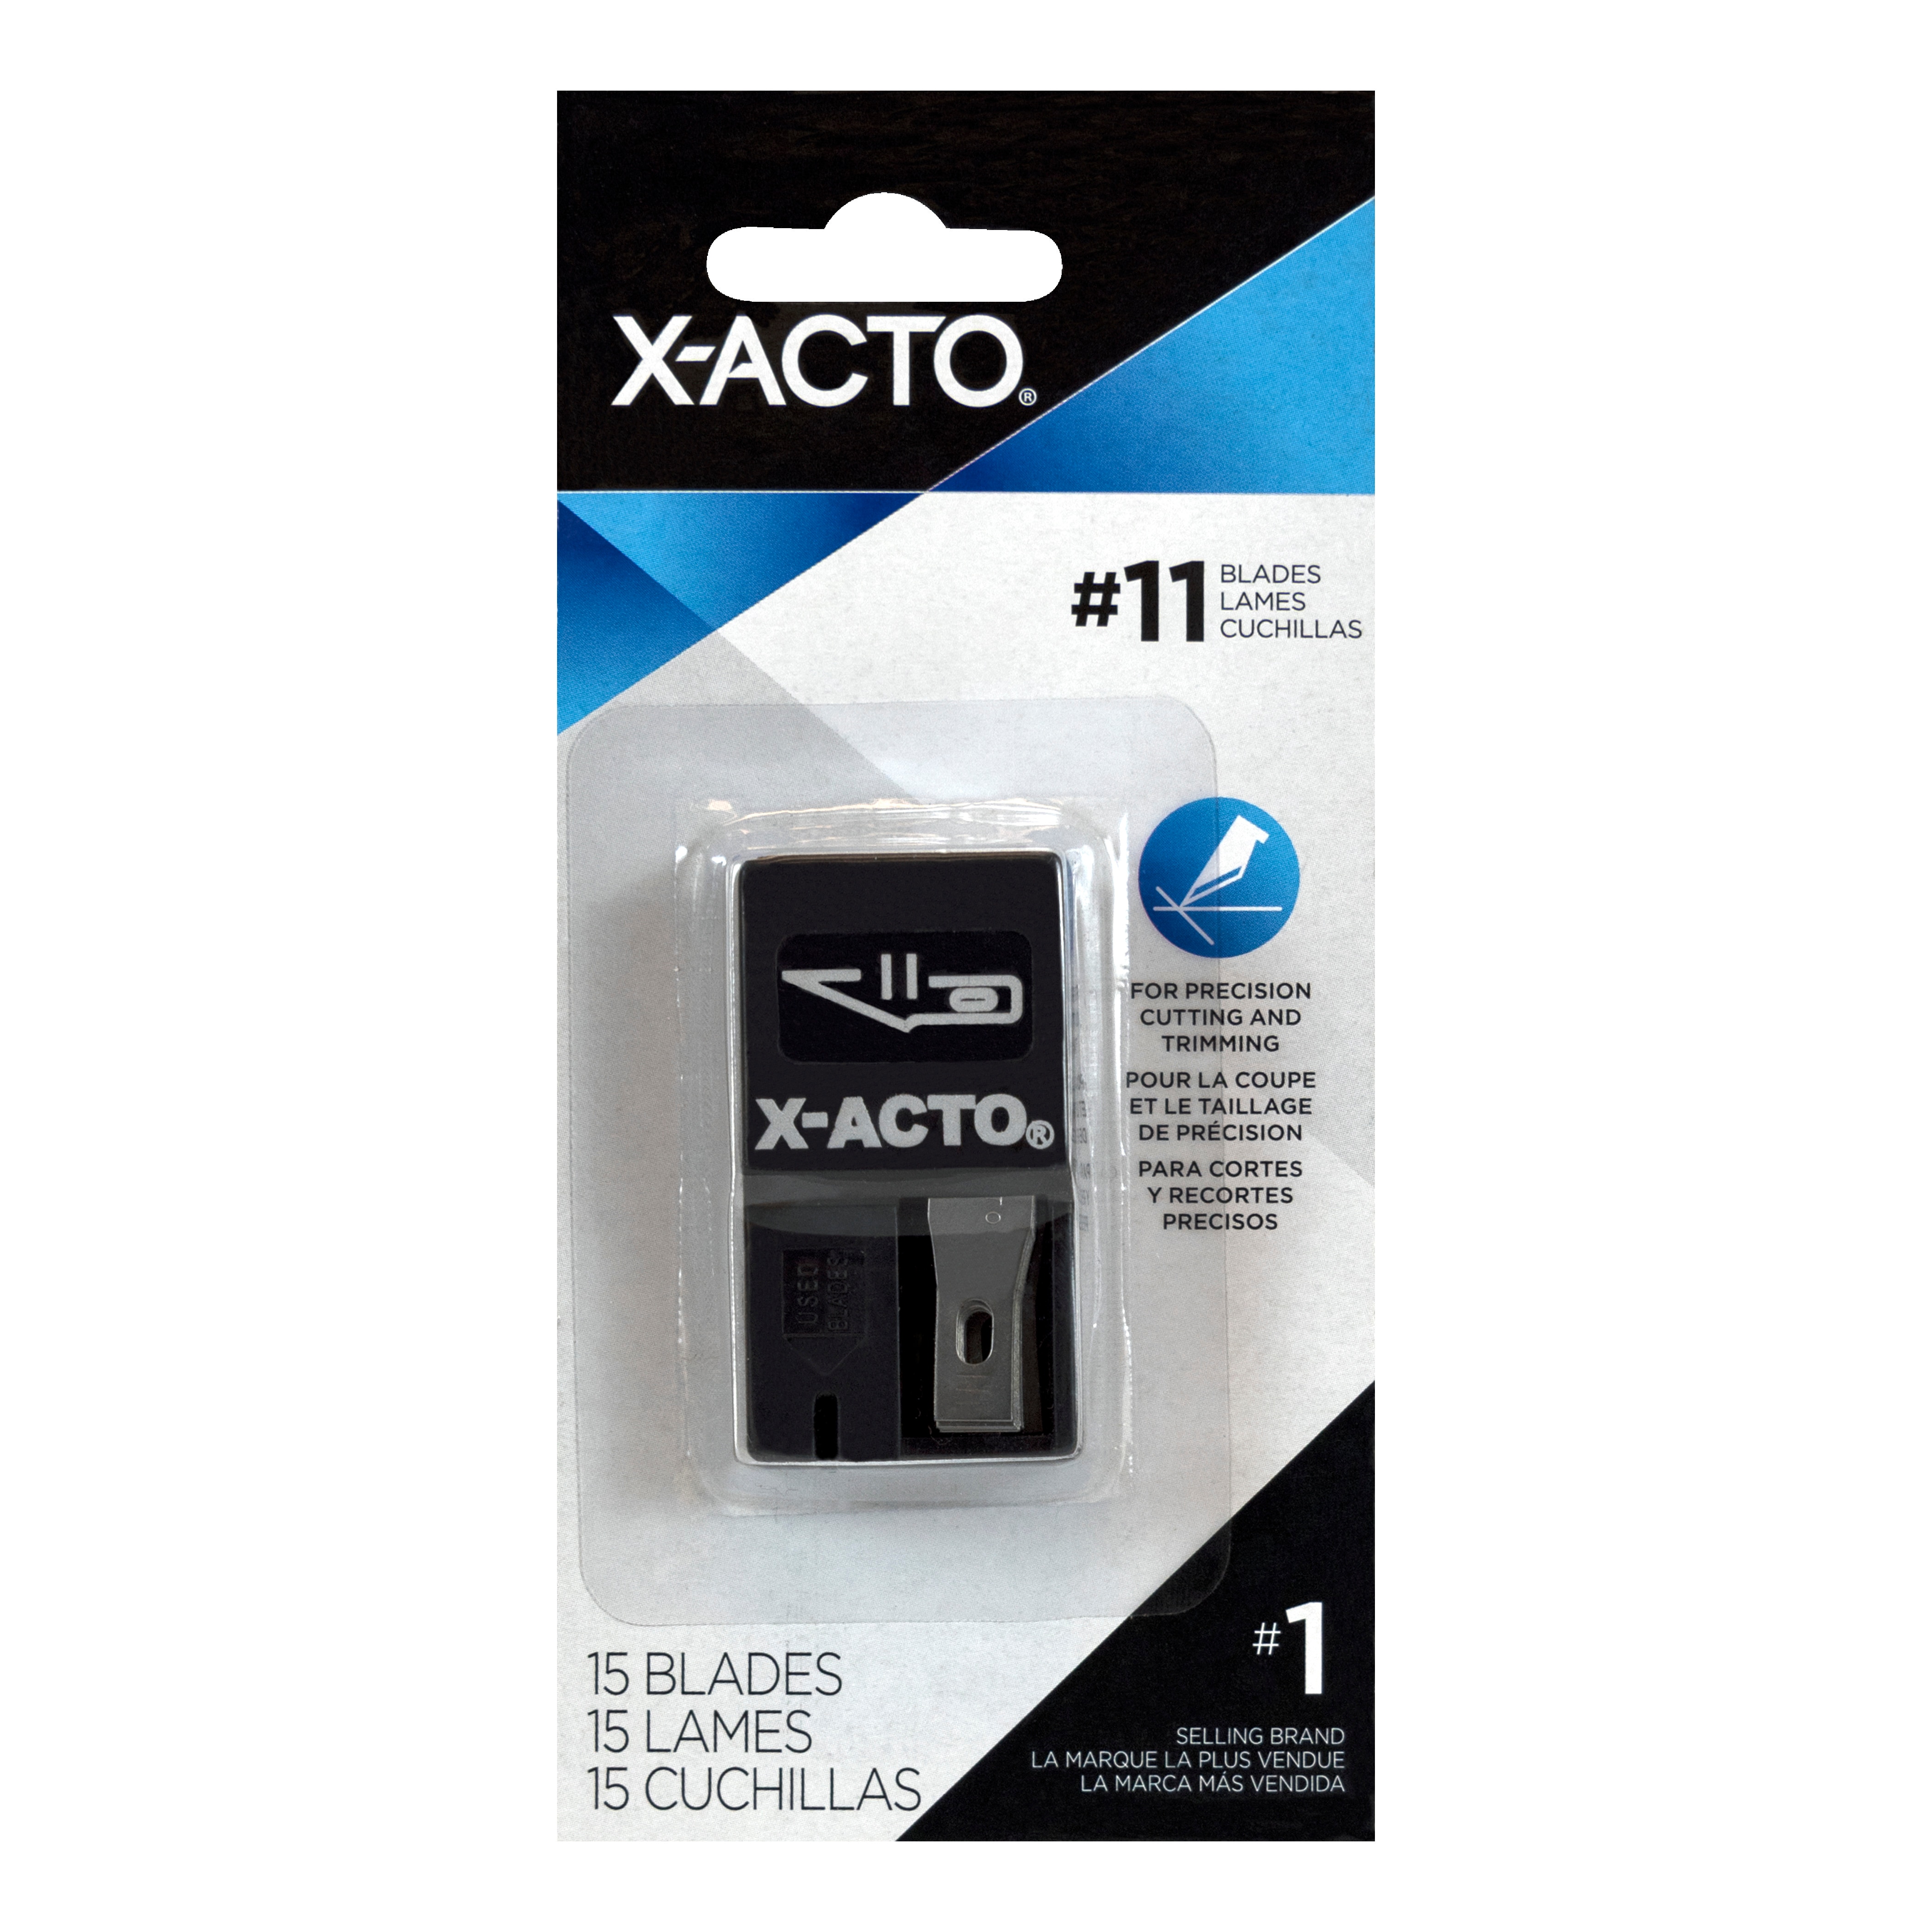 Xacto Blade Dispenser w/11 blades